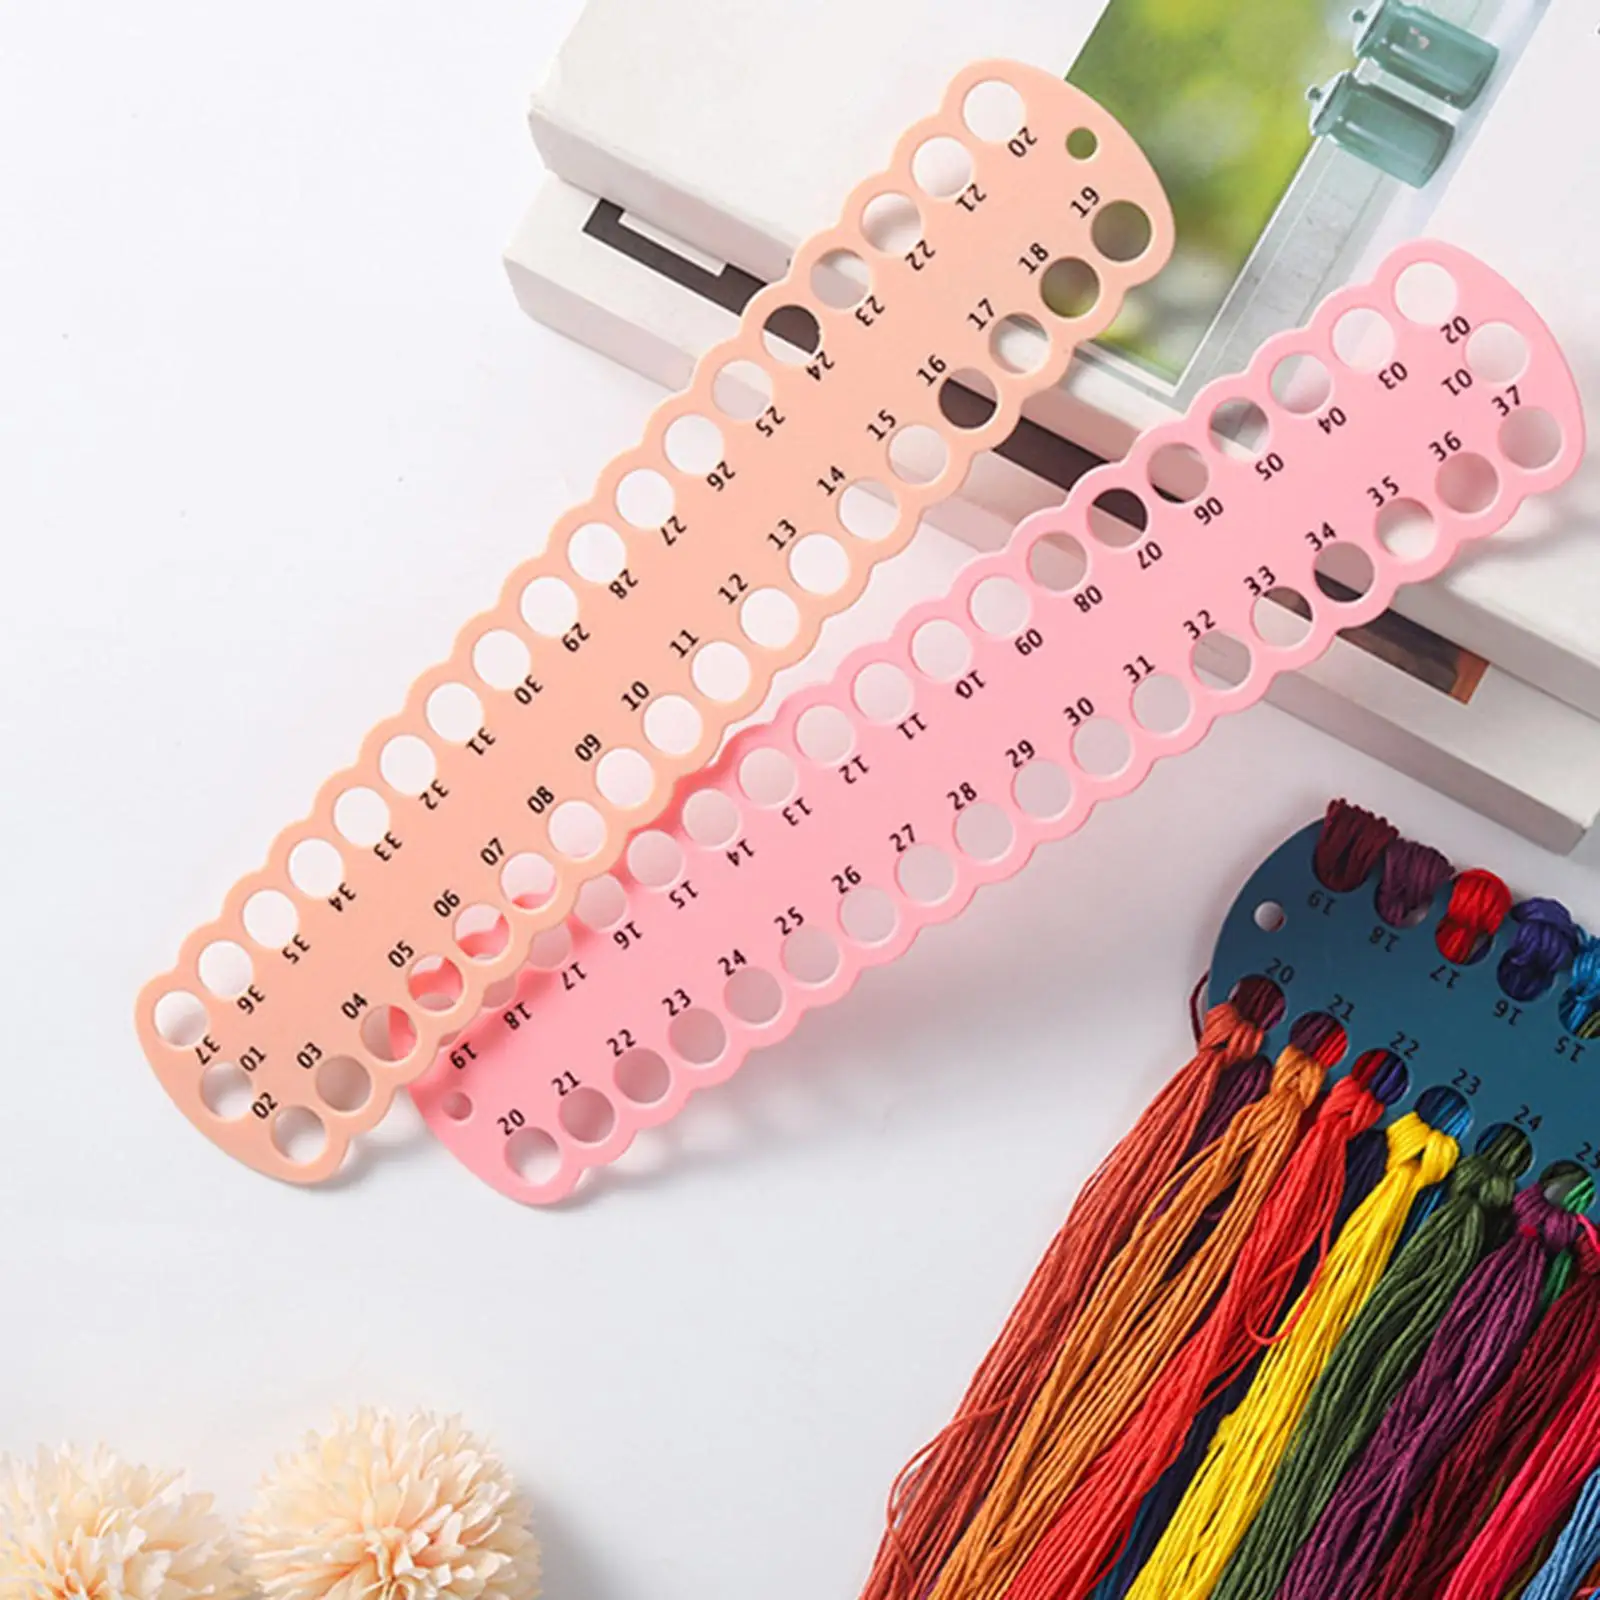 6x Embroidery Floss Organizer Equipment Colorful Needlework Thread Sorter Multipurpose DIY Supplies Lightweight Organization